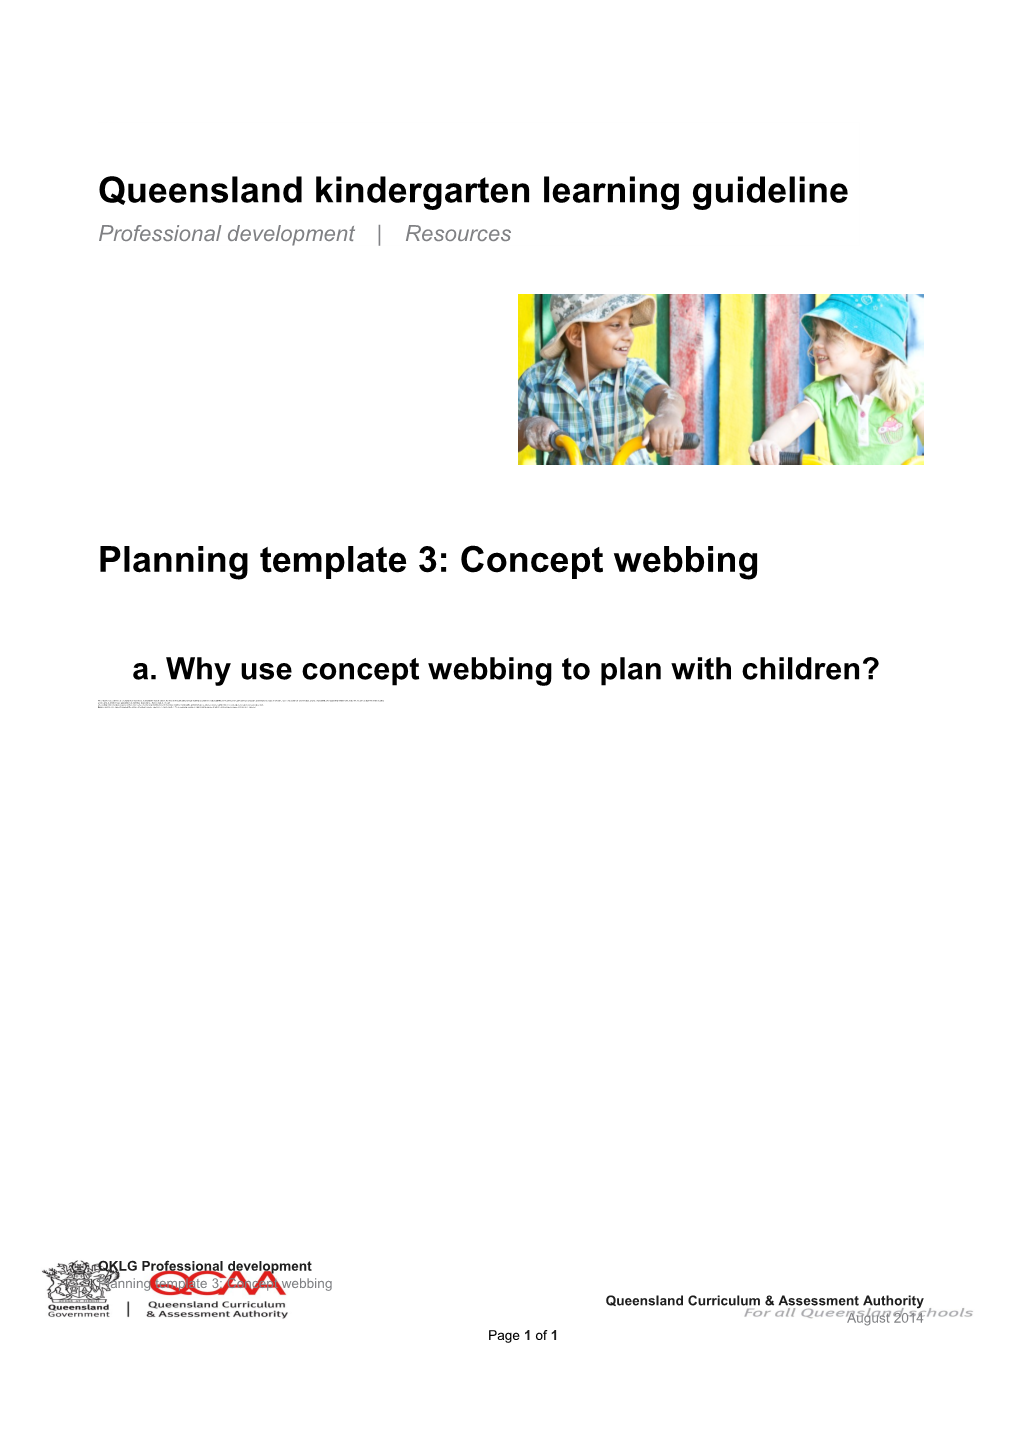 Queensland Kindergarten Learning Guideline: Planning Template 3: Concept Webbing